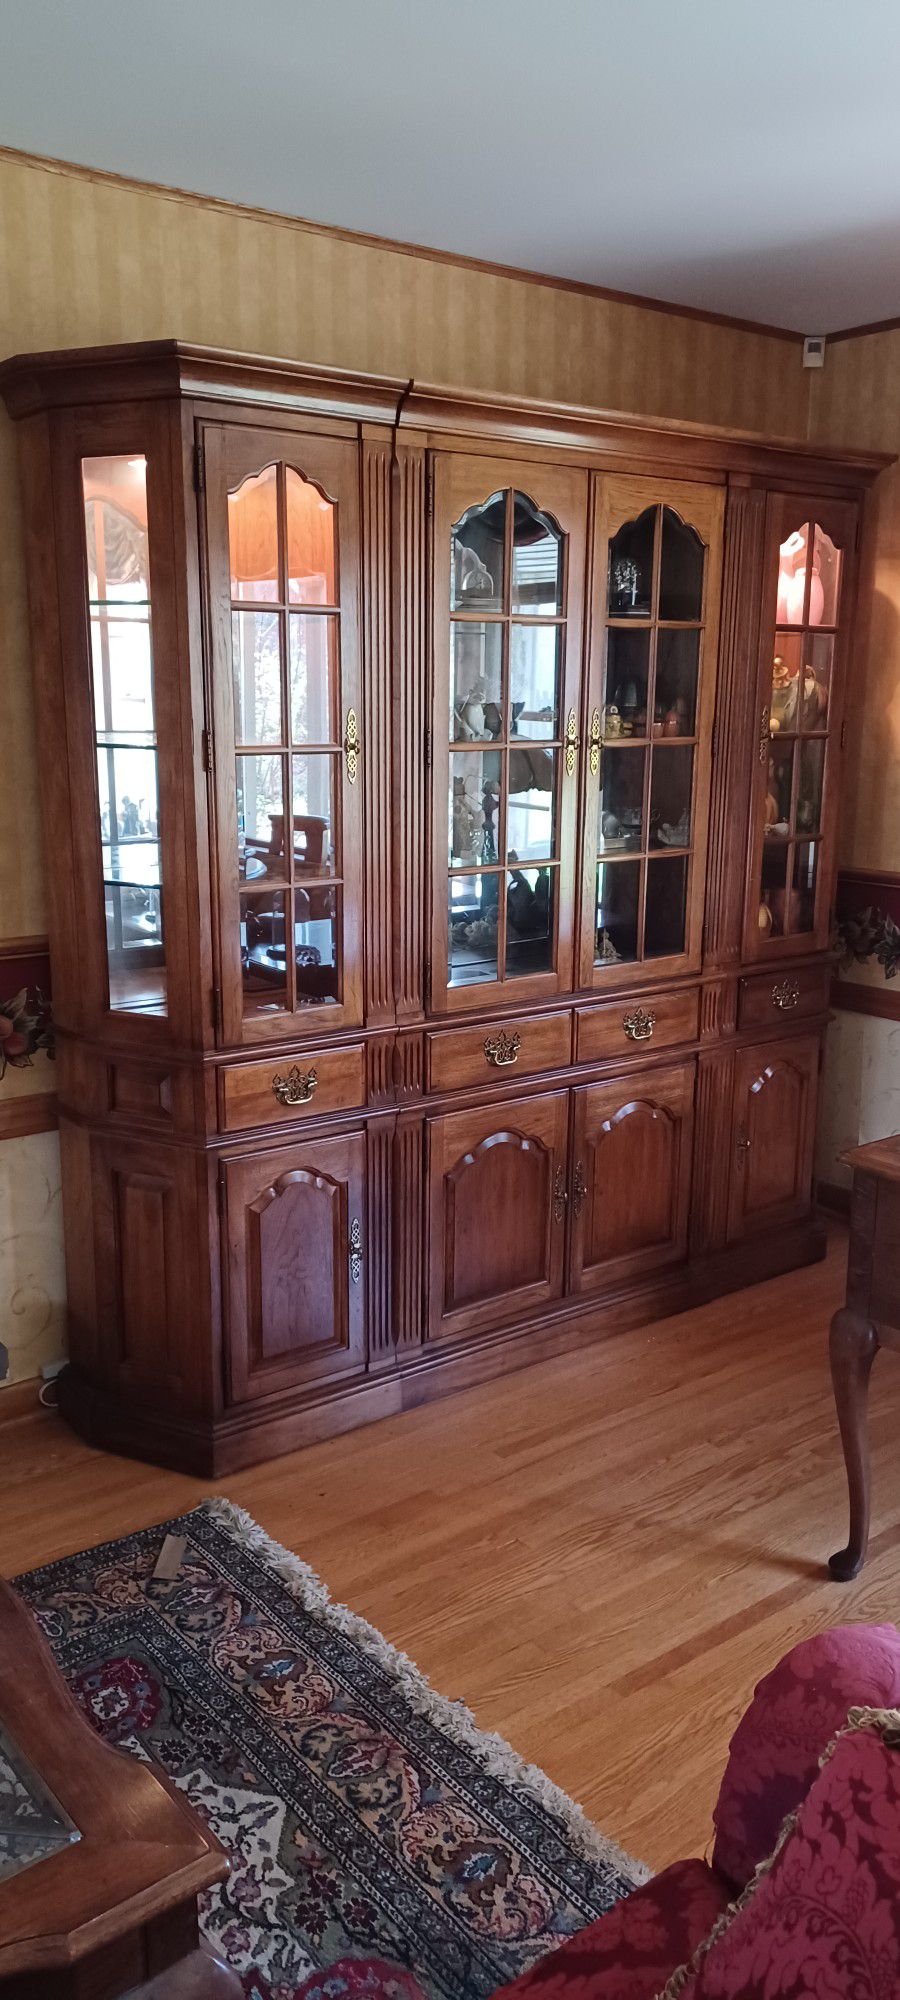 (3) Piece Thomasville Display Cabinets